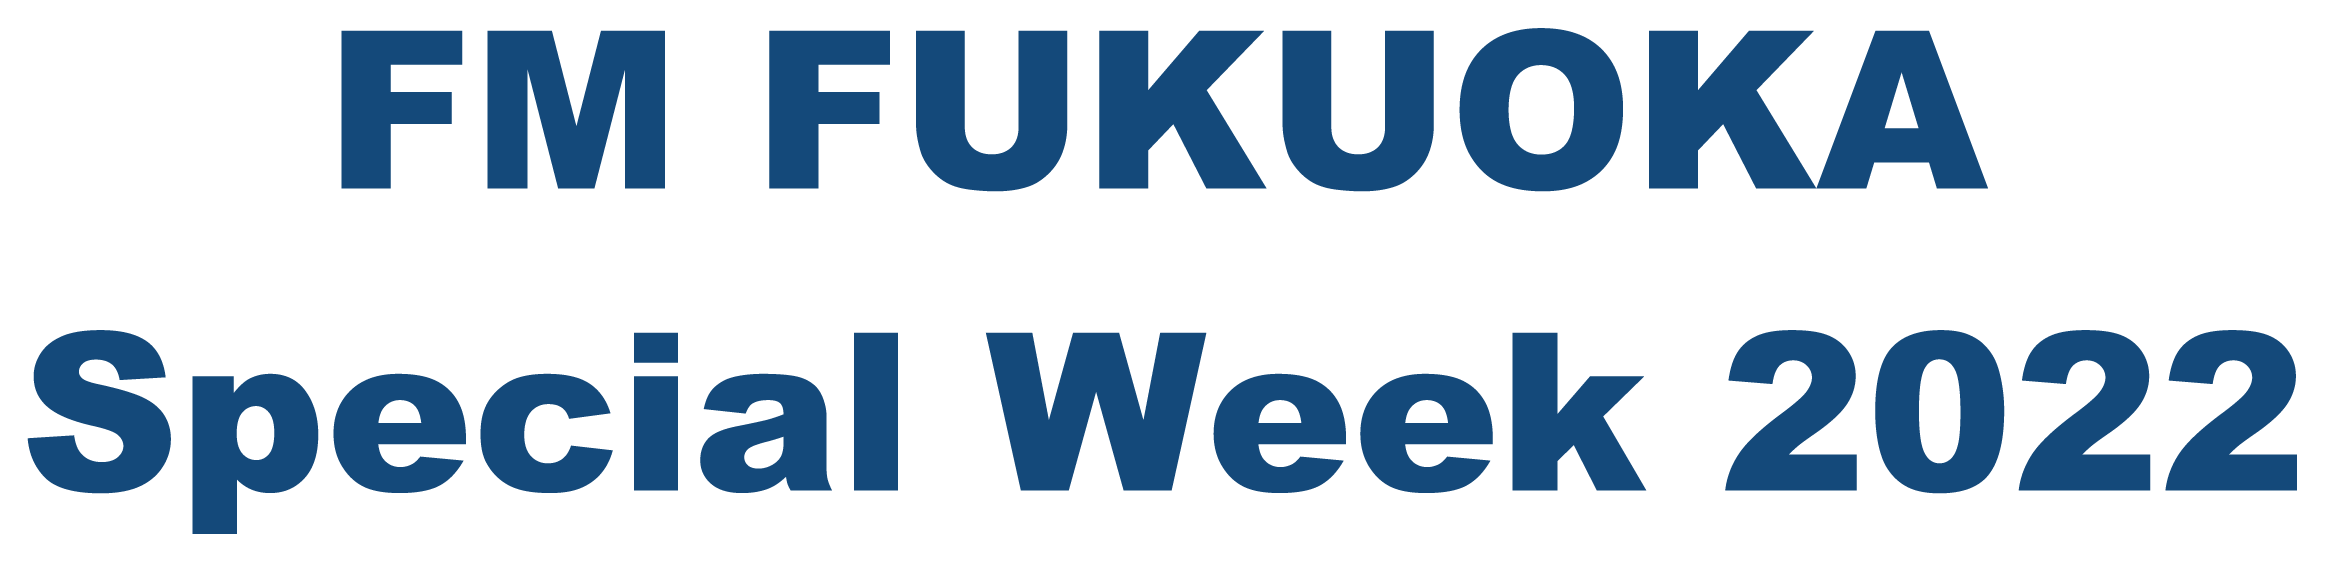 FM FUKUOKA Special Week 2022